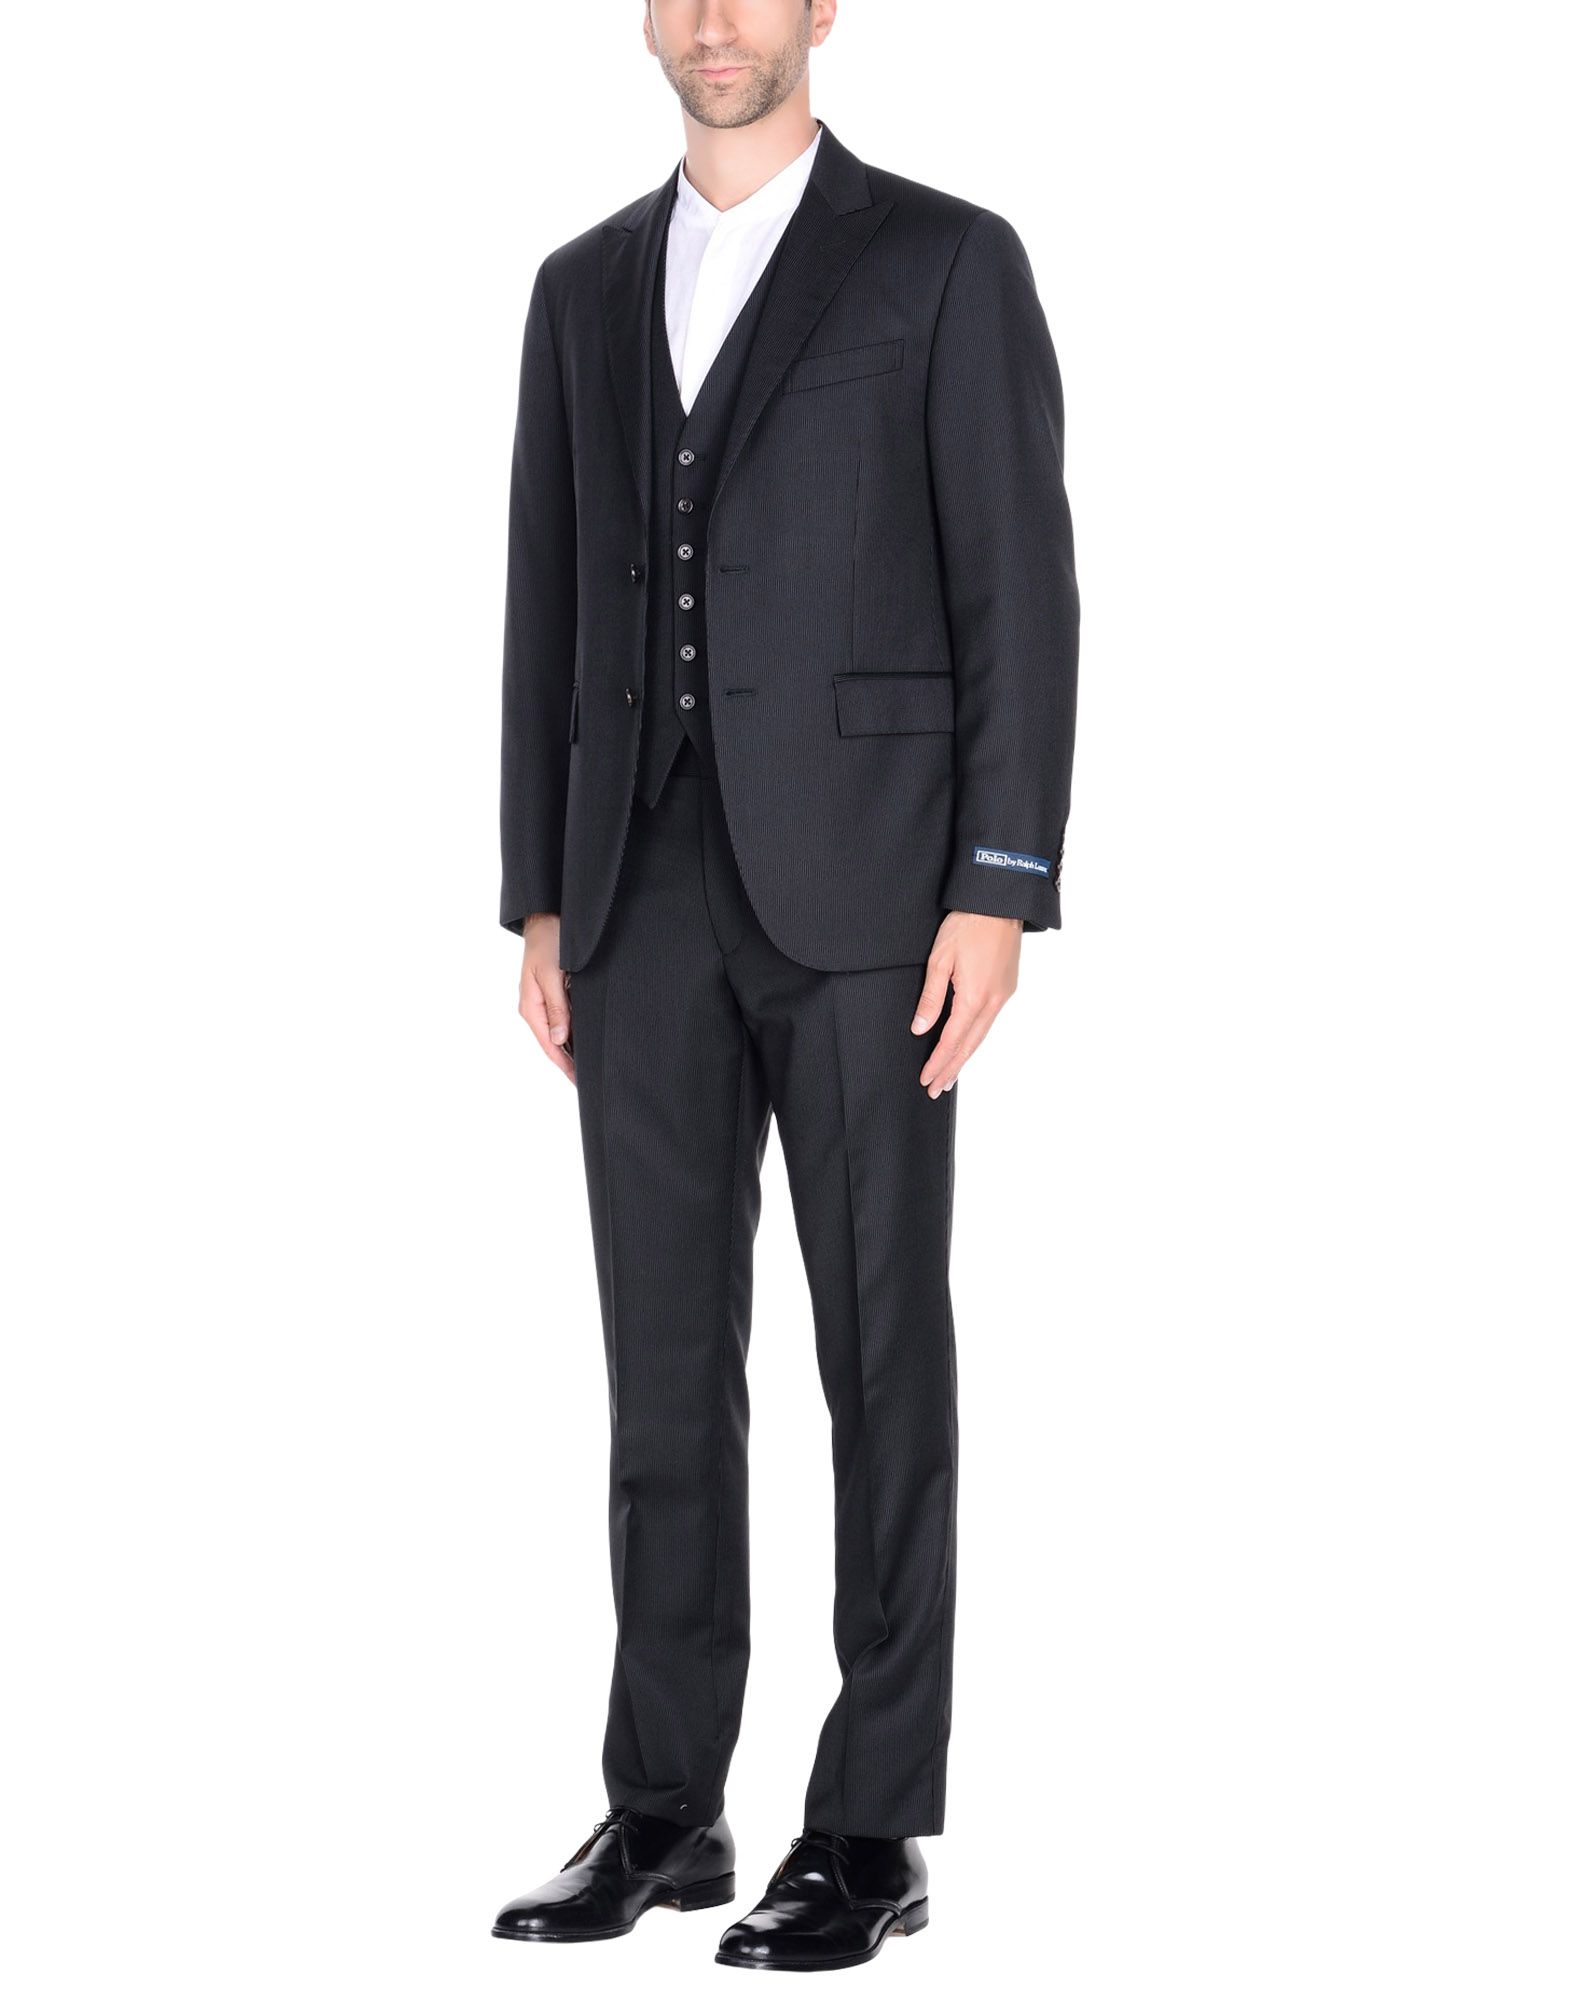 Купить костюм мужской boss. Костюмы uomo Lardini 0247. Армани костюм мужской классический. Hugo Boss Suits.